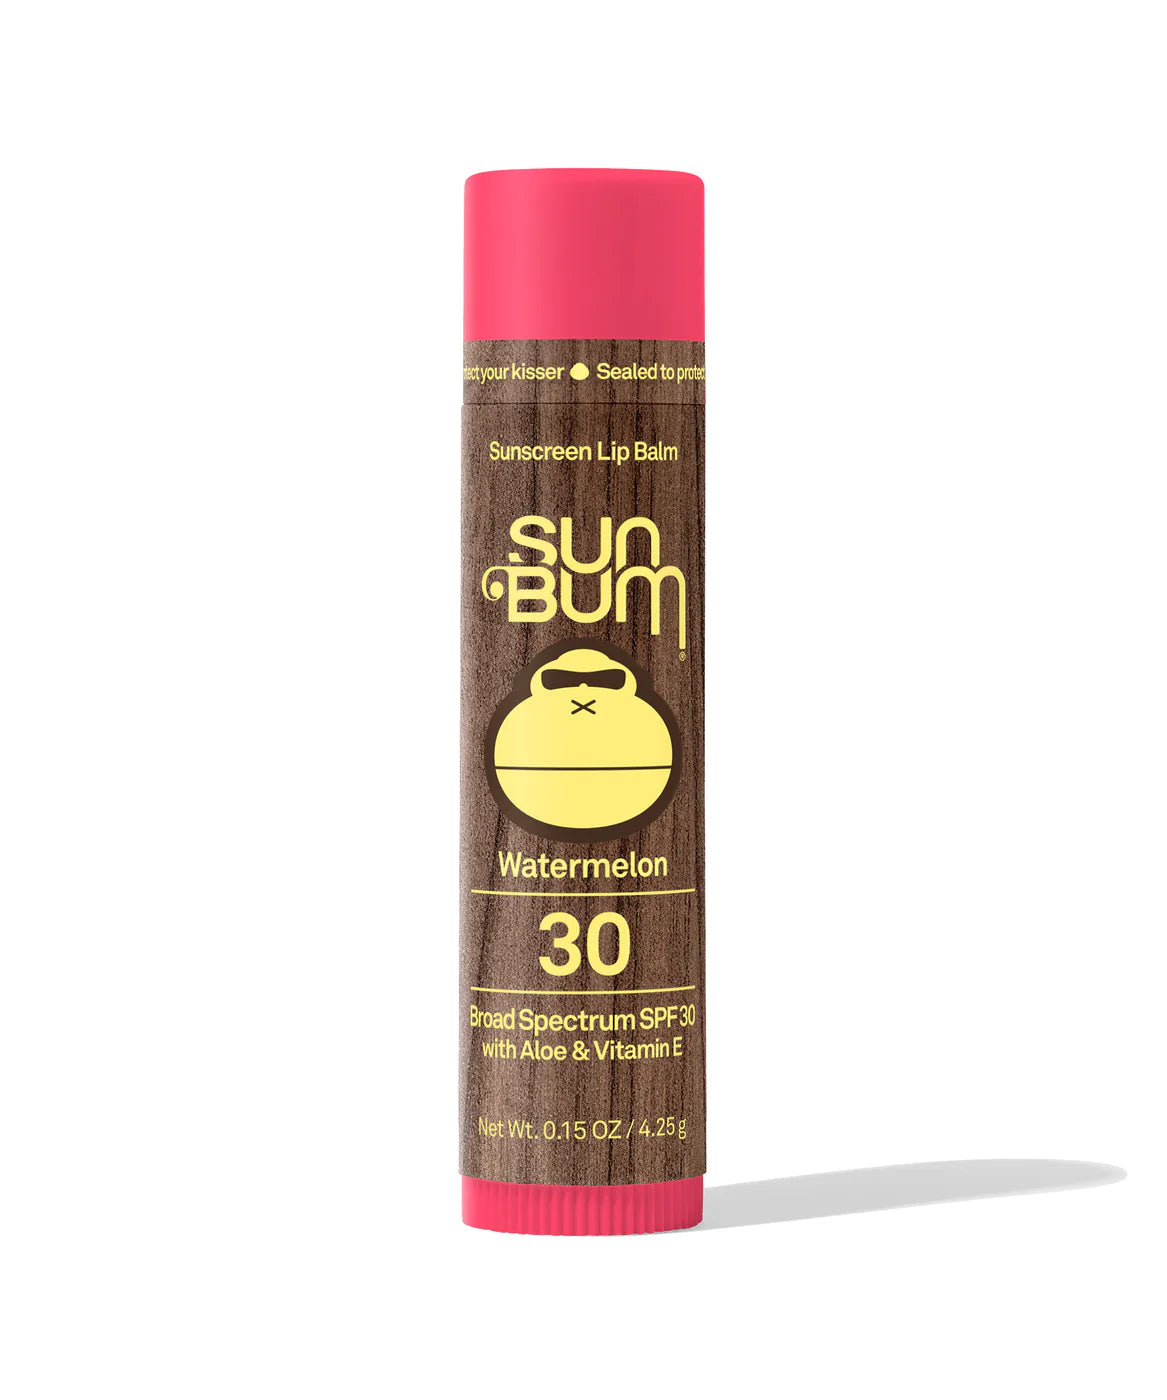 Sunbum - Original SPF 30 Sunscreen Lip Balm - Watermelon